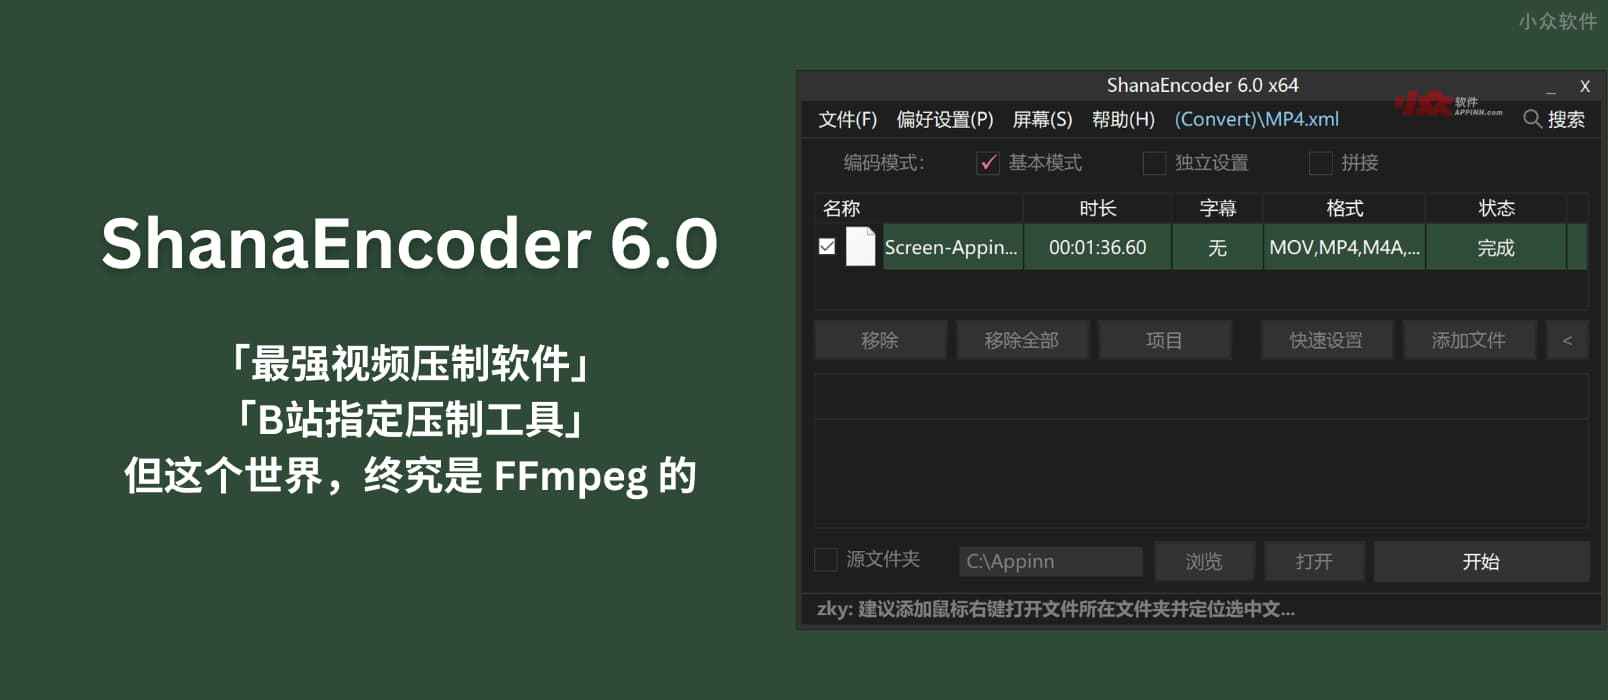 ShanaEncoder 6.0 - 「最强视频压制软件」「B站指定压制工具」｜但这个世界，终究是 FFmpeg 的